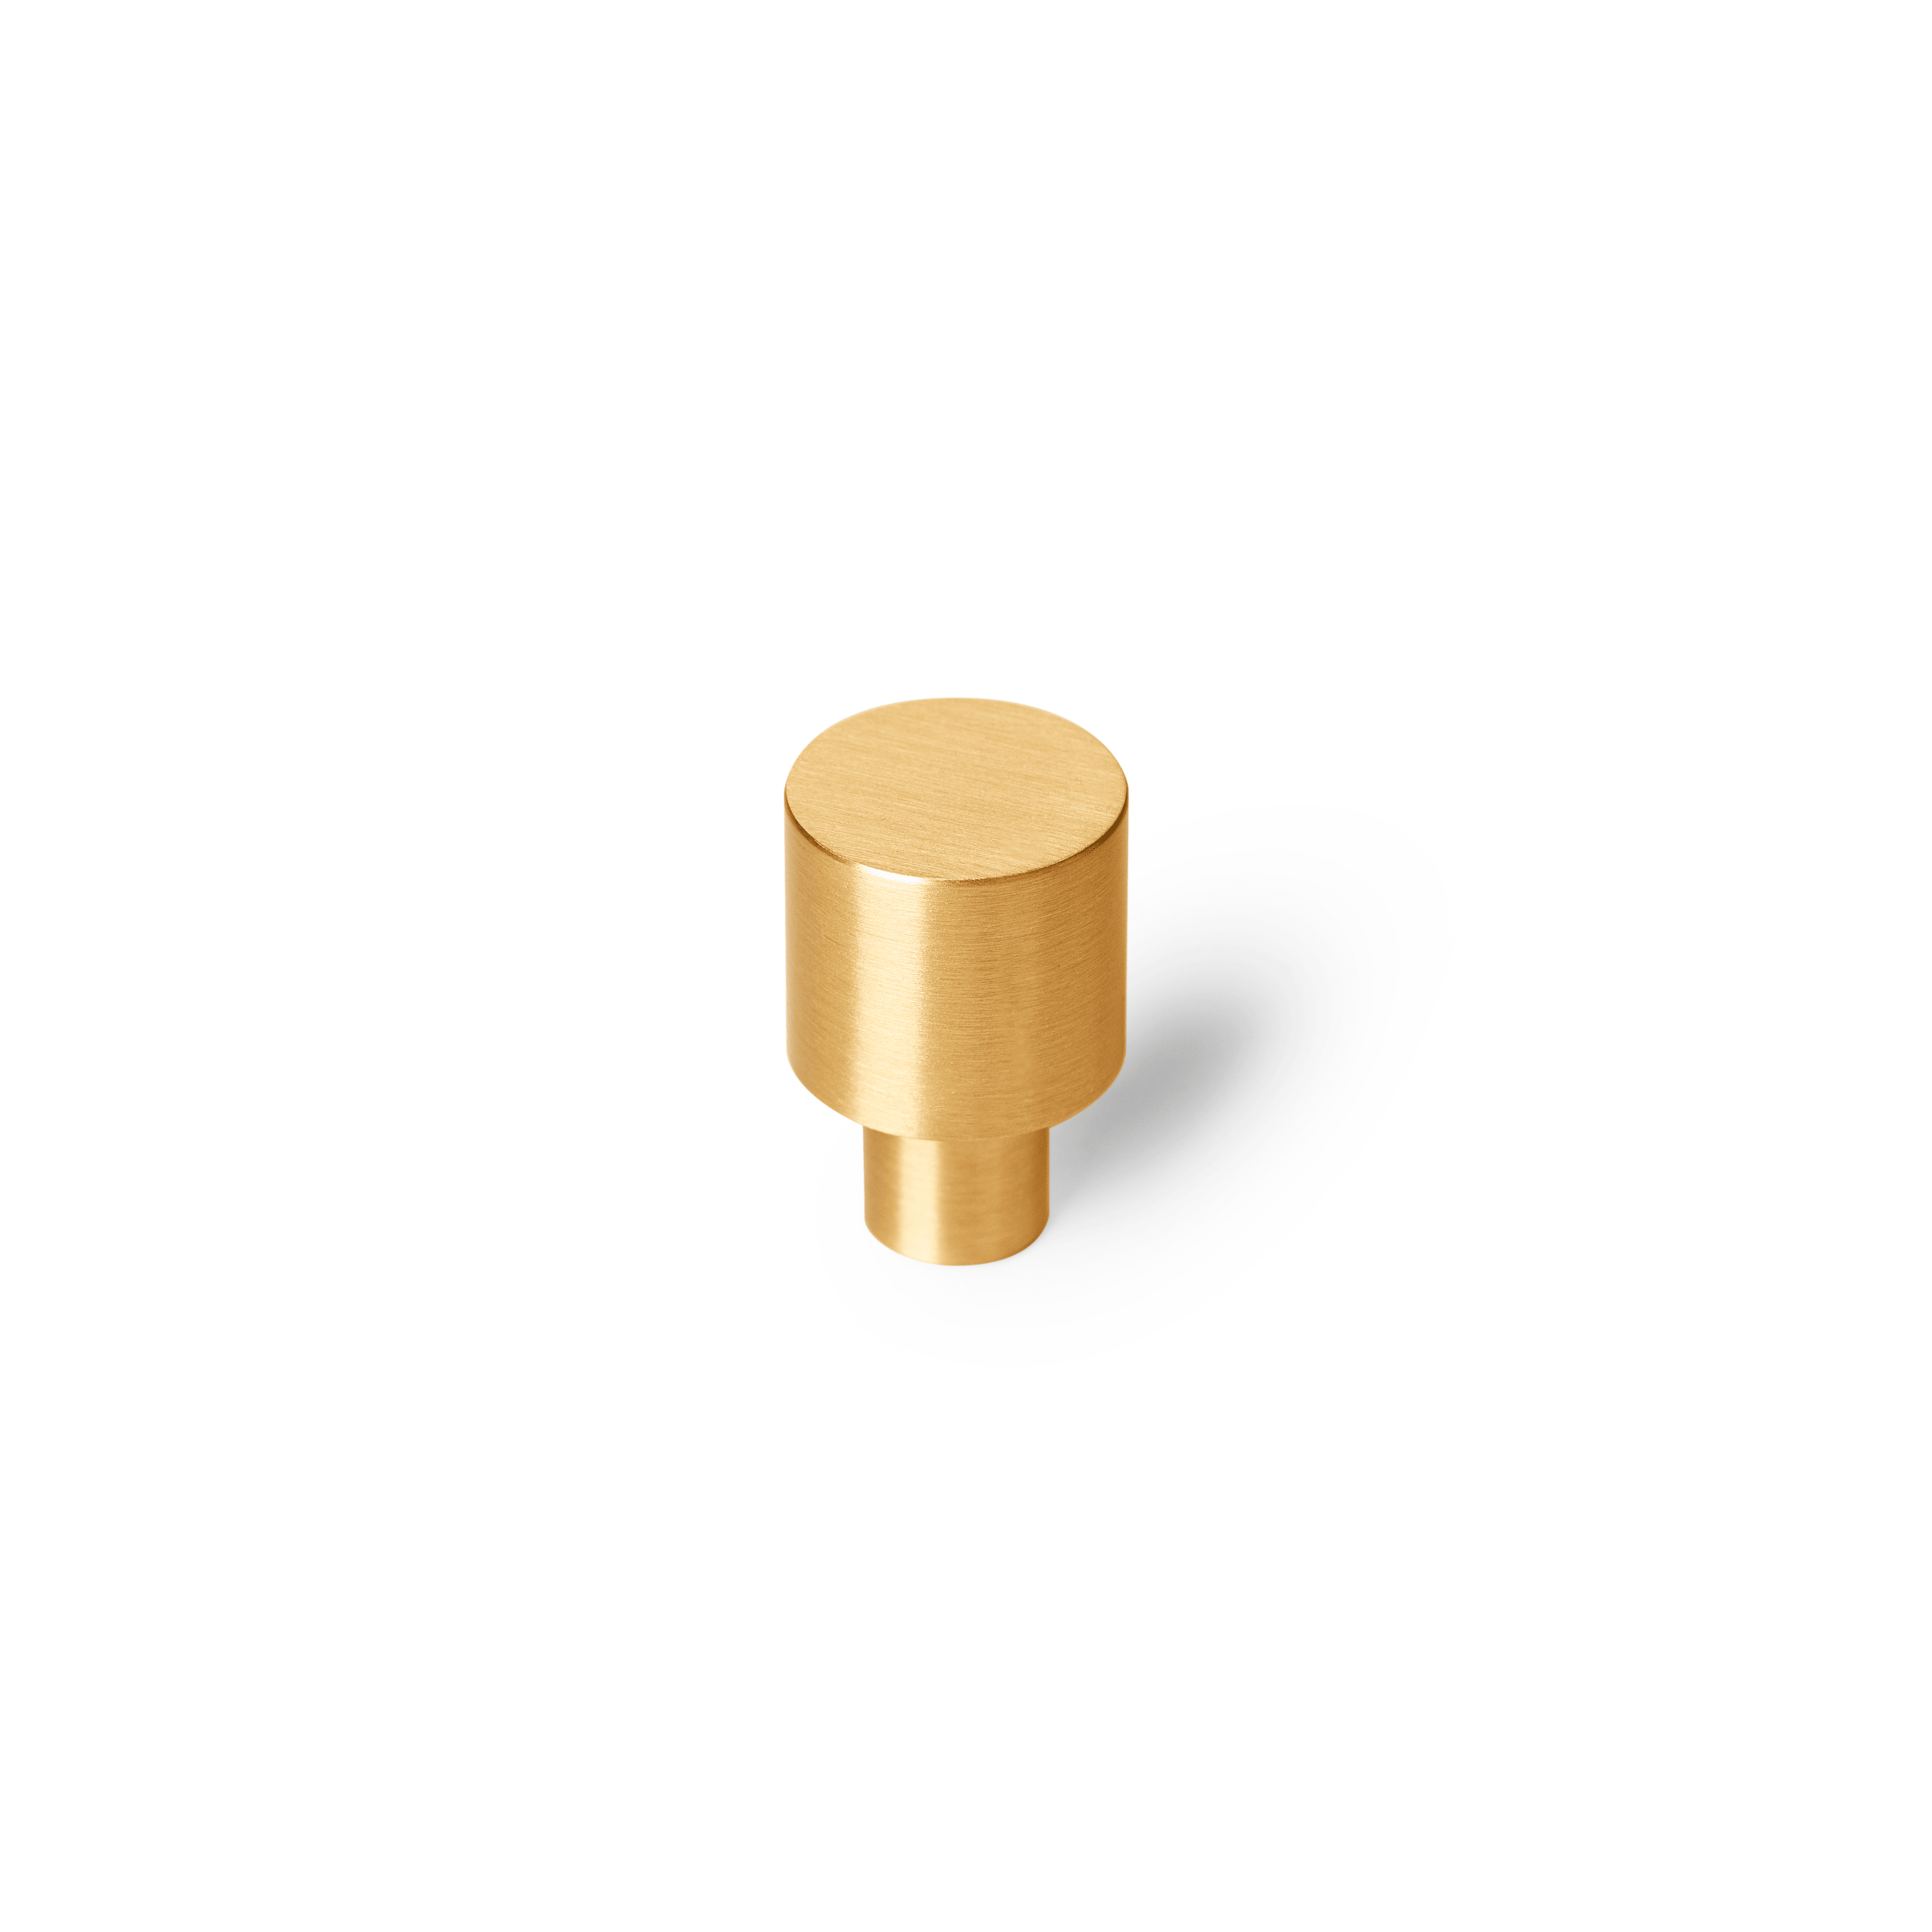 Ornate Gold Knob Knob 20mm / Gold / Brass - M A N T A R A